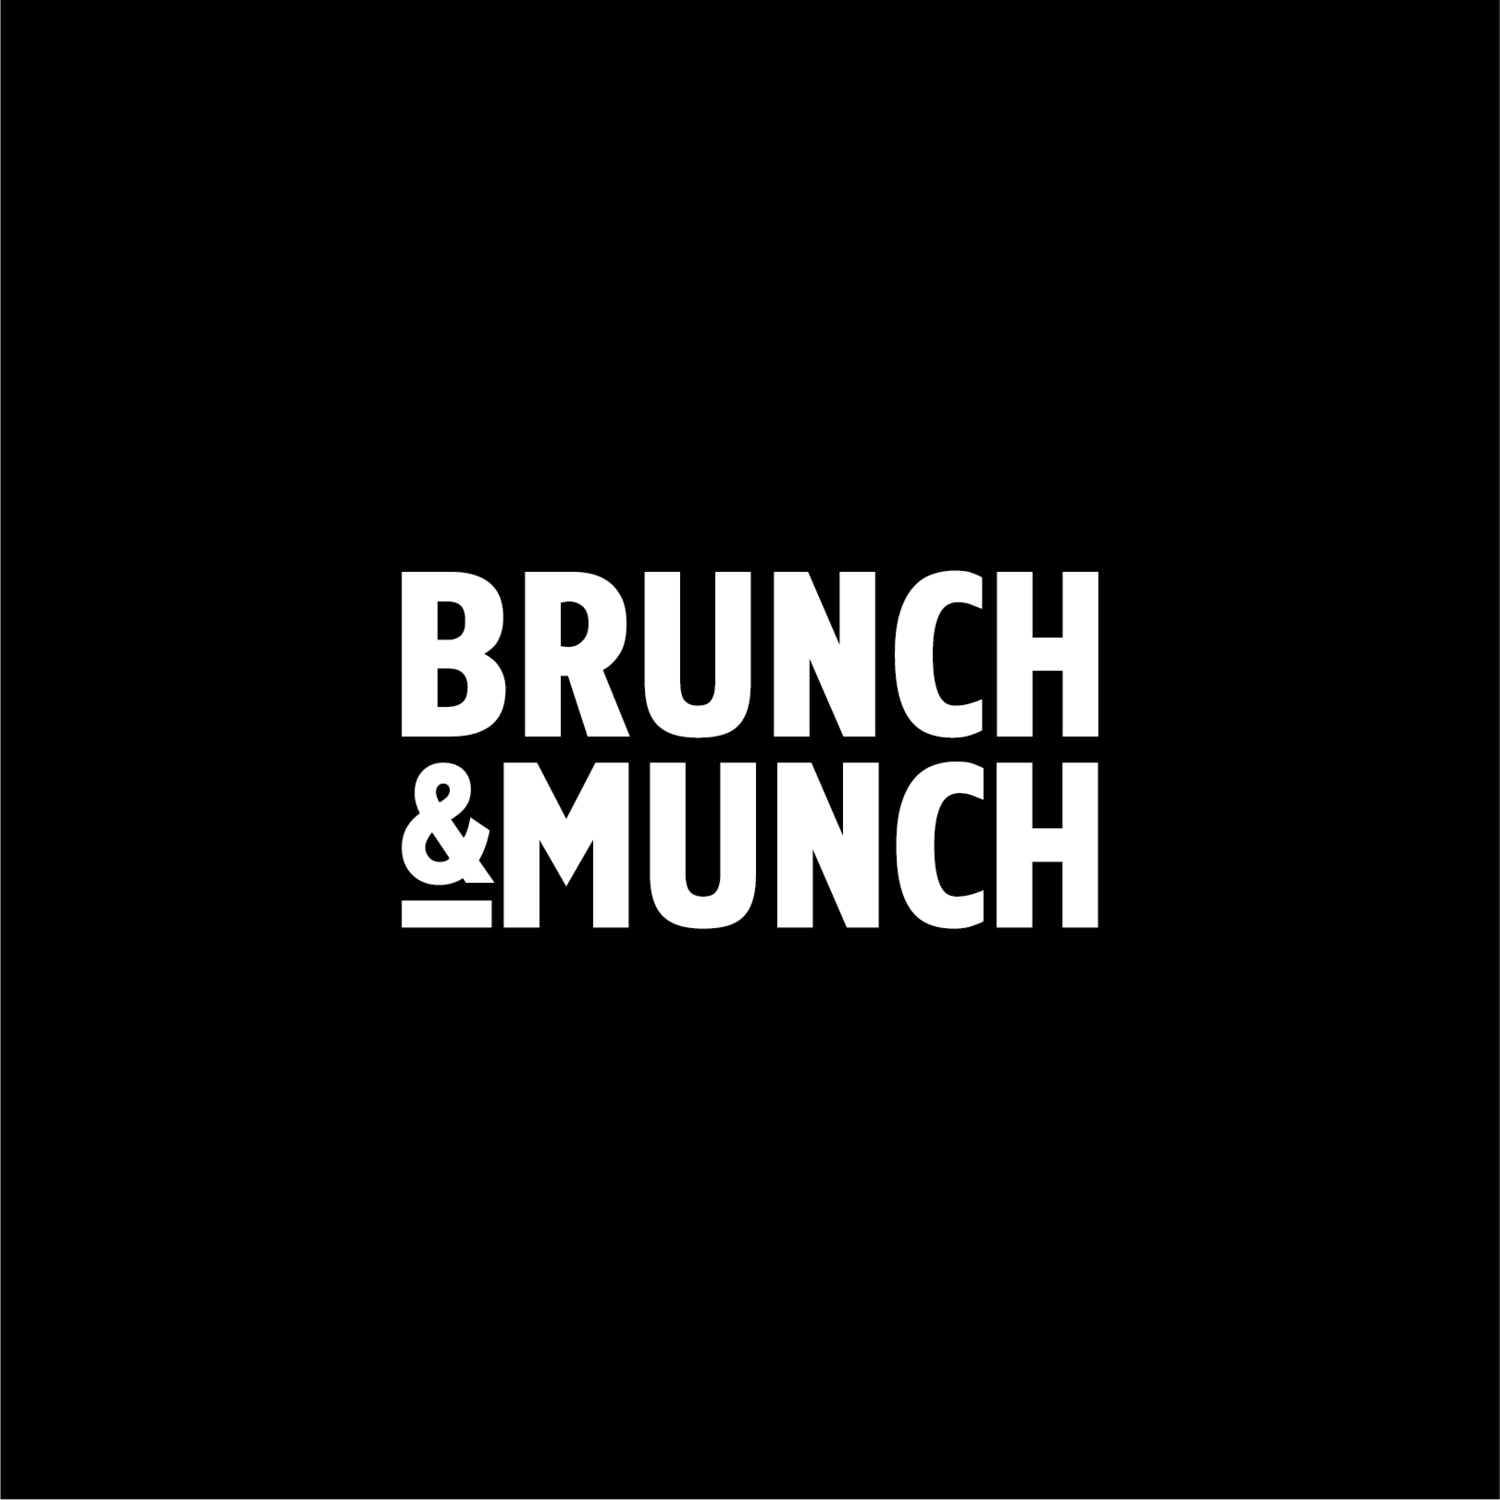 %Brunch&Munch